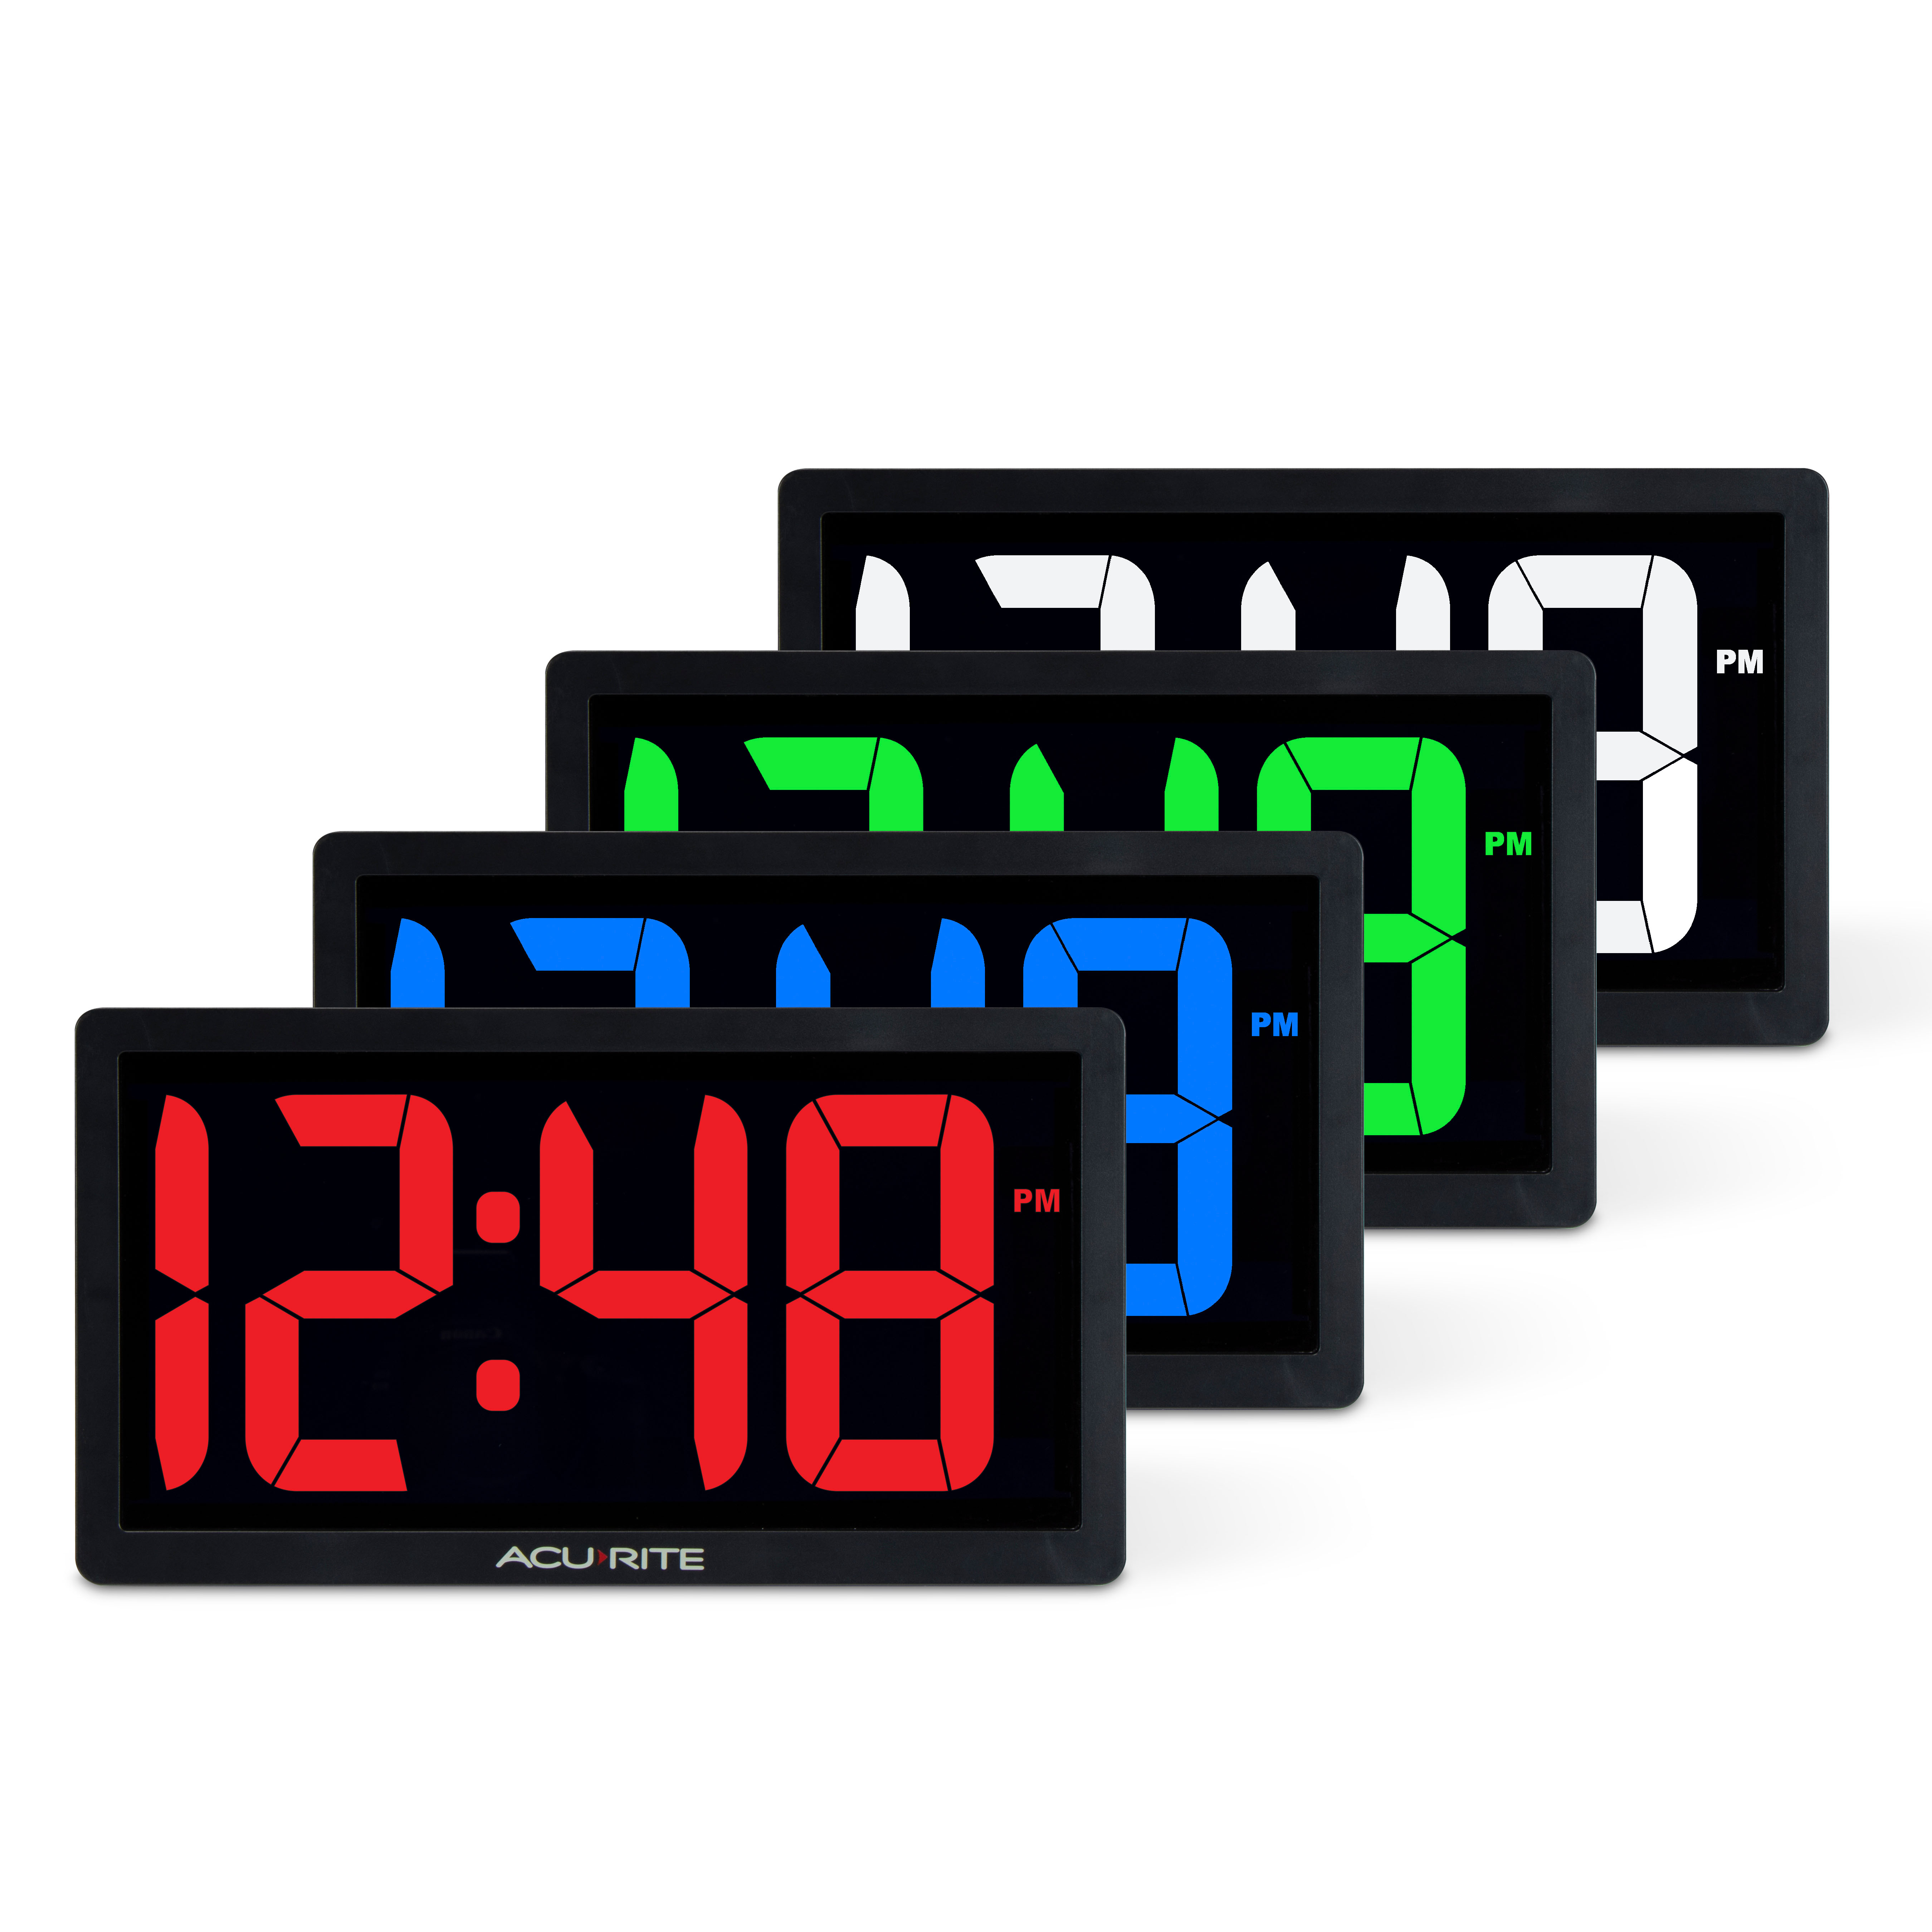 10-inch LED Digital Clock with Auto Dimming Brightness – Clocks